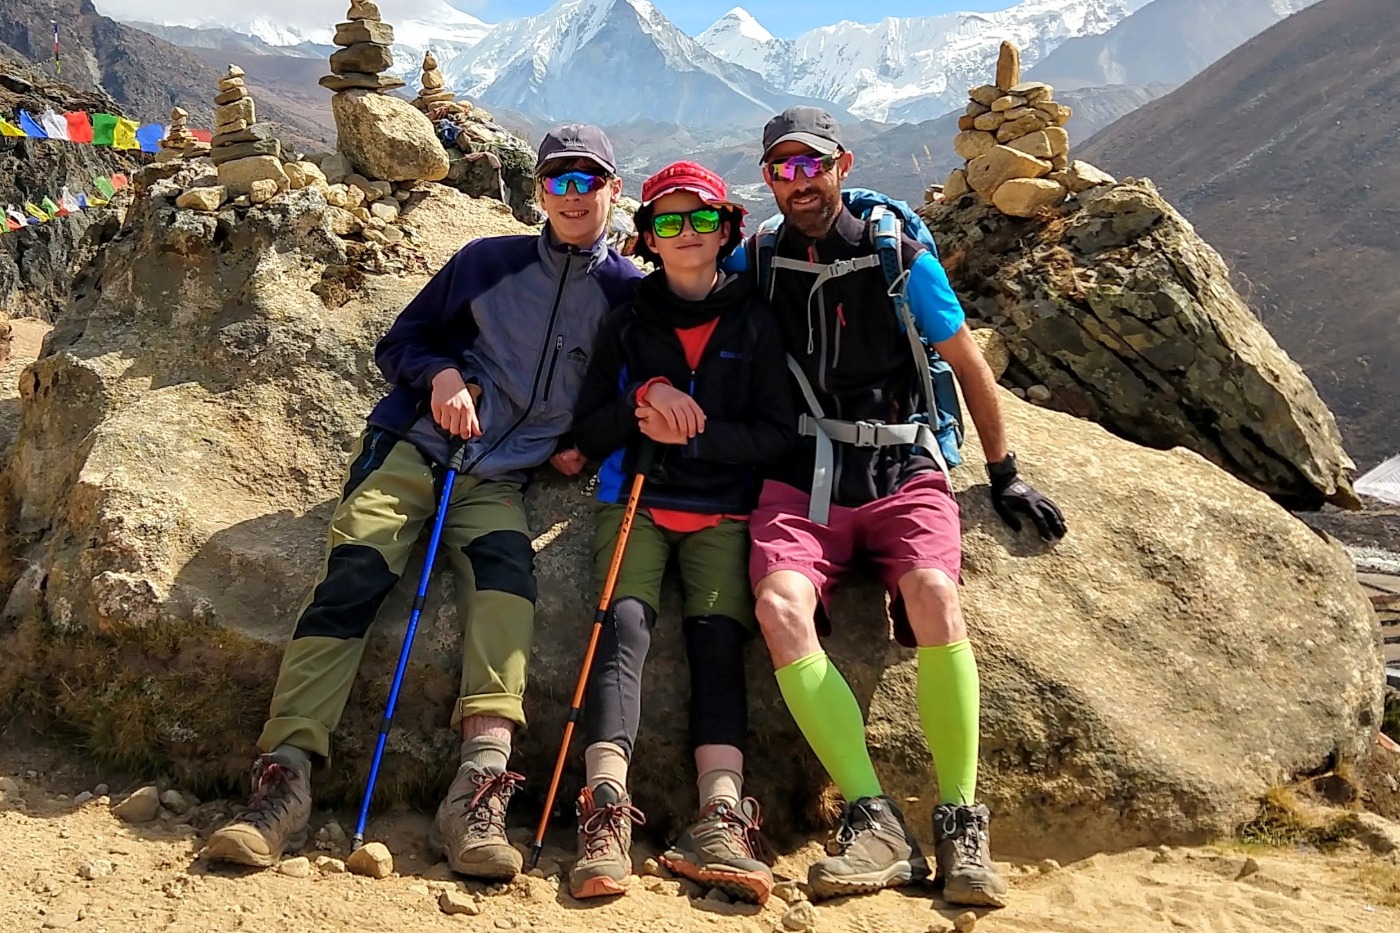 trekking in Nepal clothing shorts